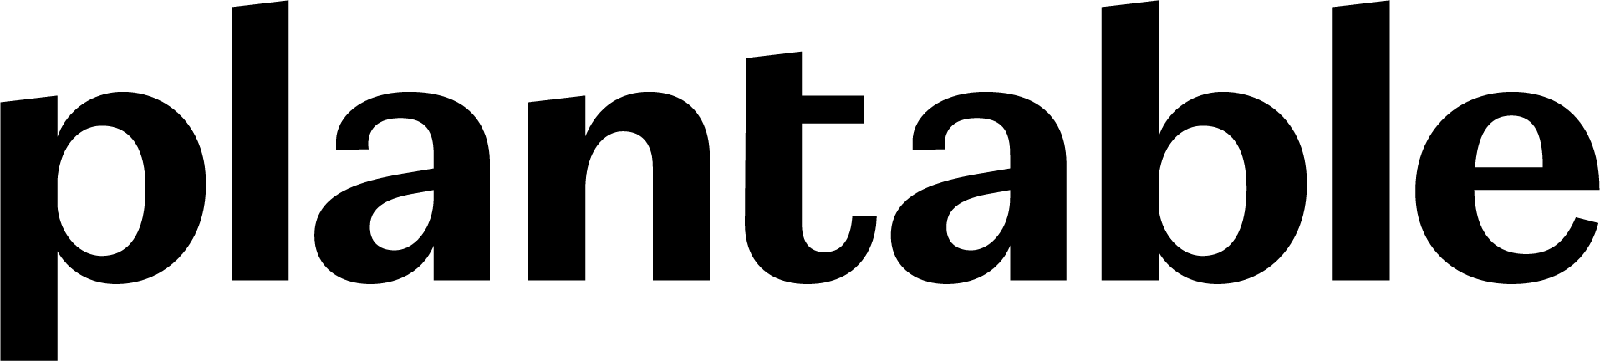 plantable-logo-black%402x.png